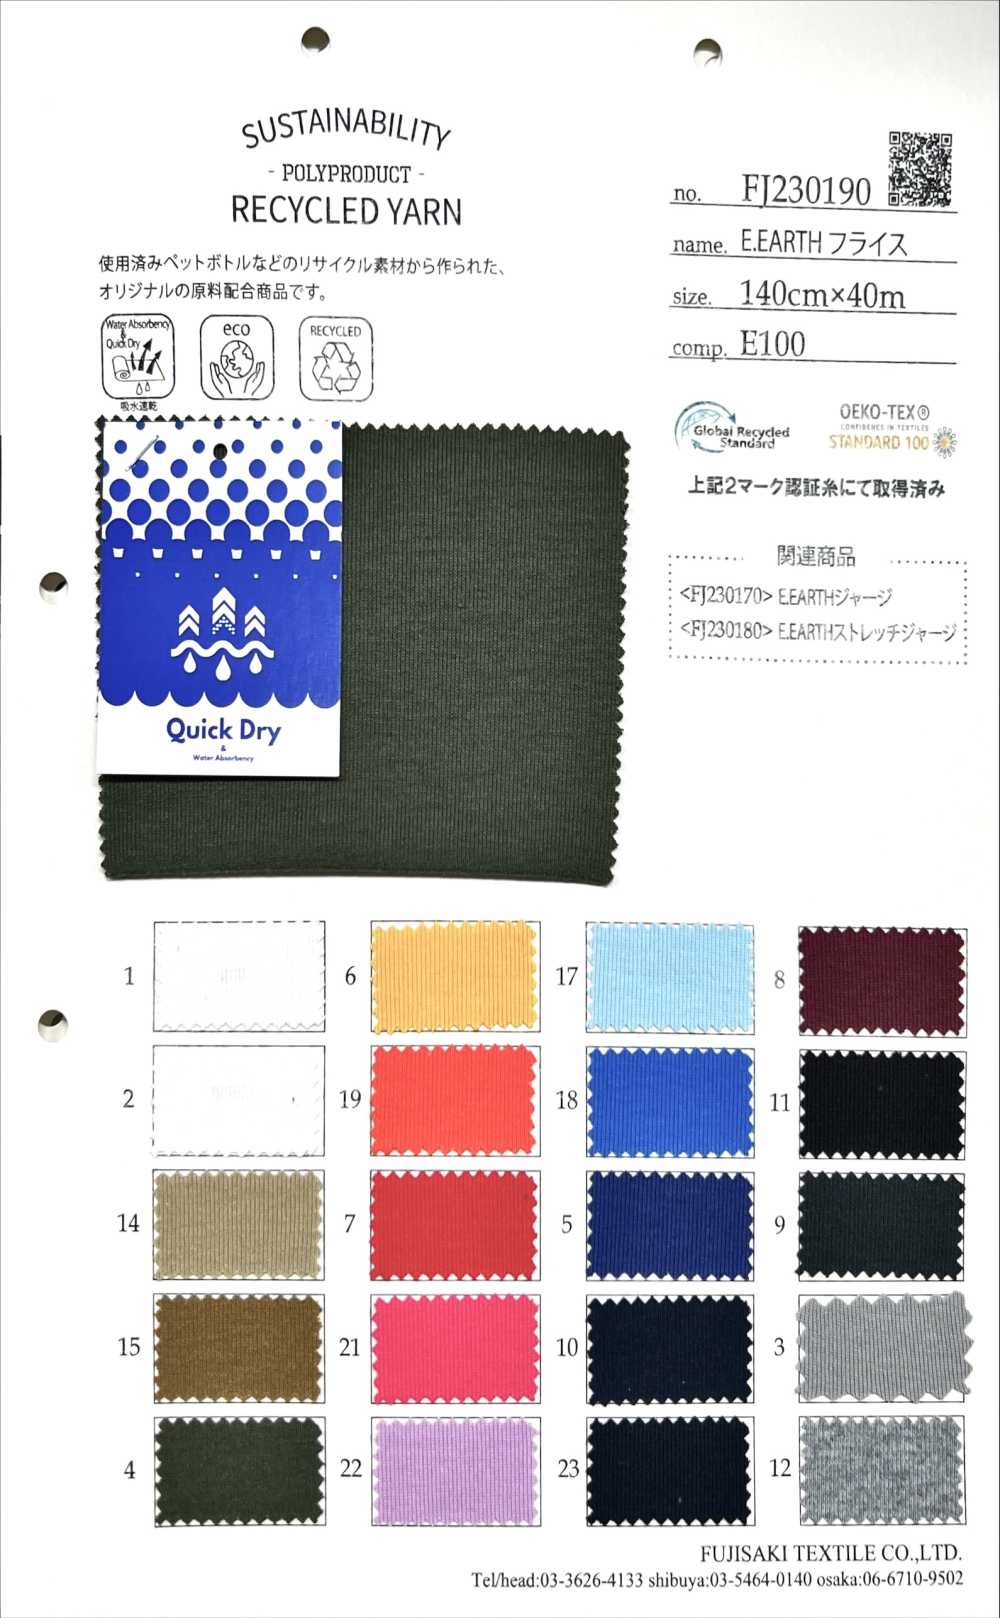 FJ230190 Costilla Circular E.EARTH[Fabrica Textil] Fujisaki Textile